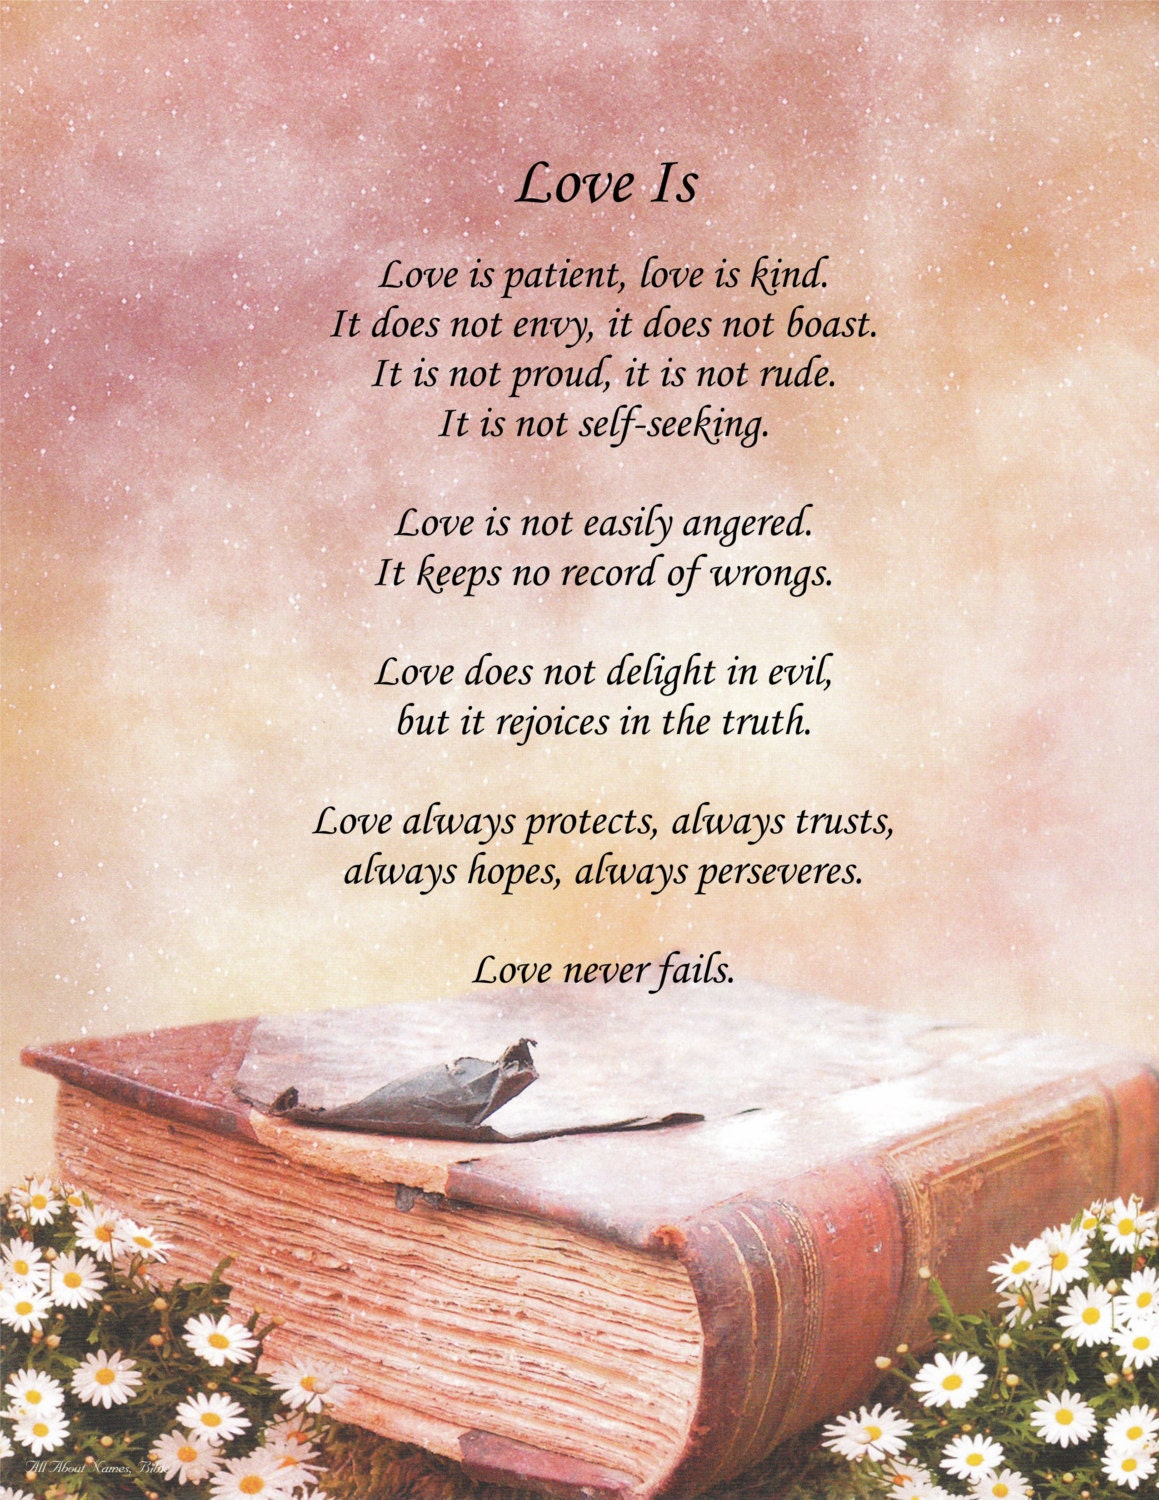 Inspirational Poem Love Is